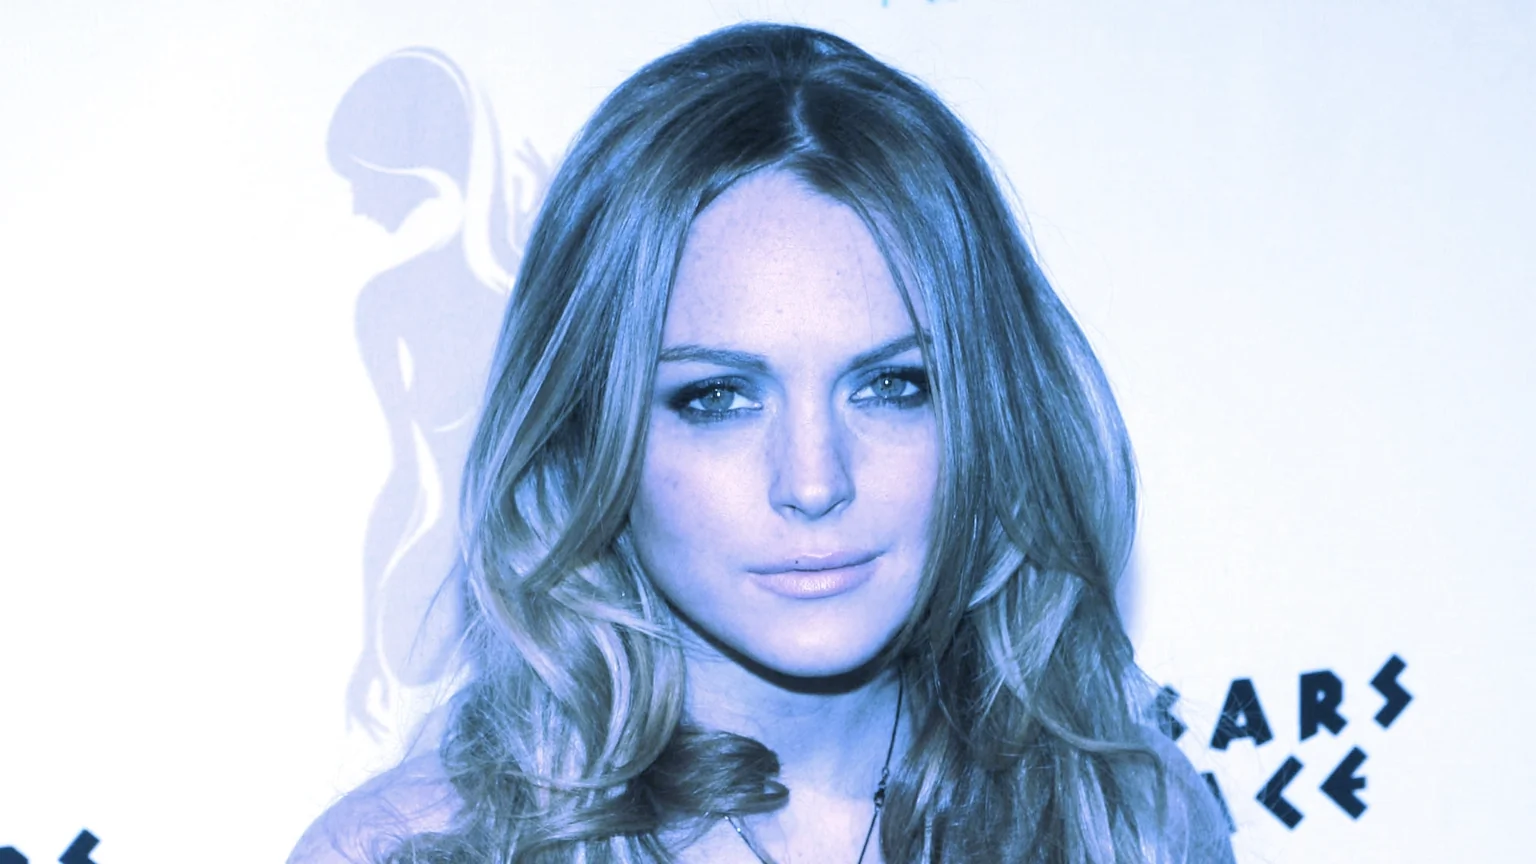 Lindsay Lohan minted her first NFT. Image: Shutterstock